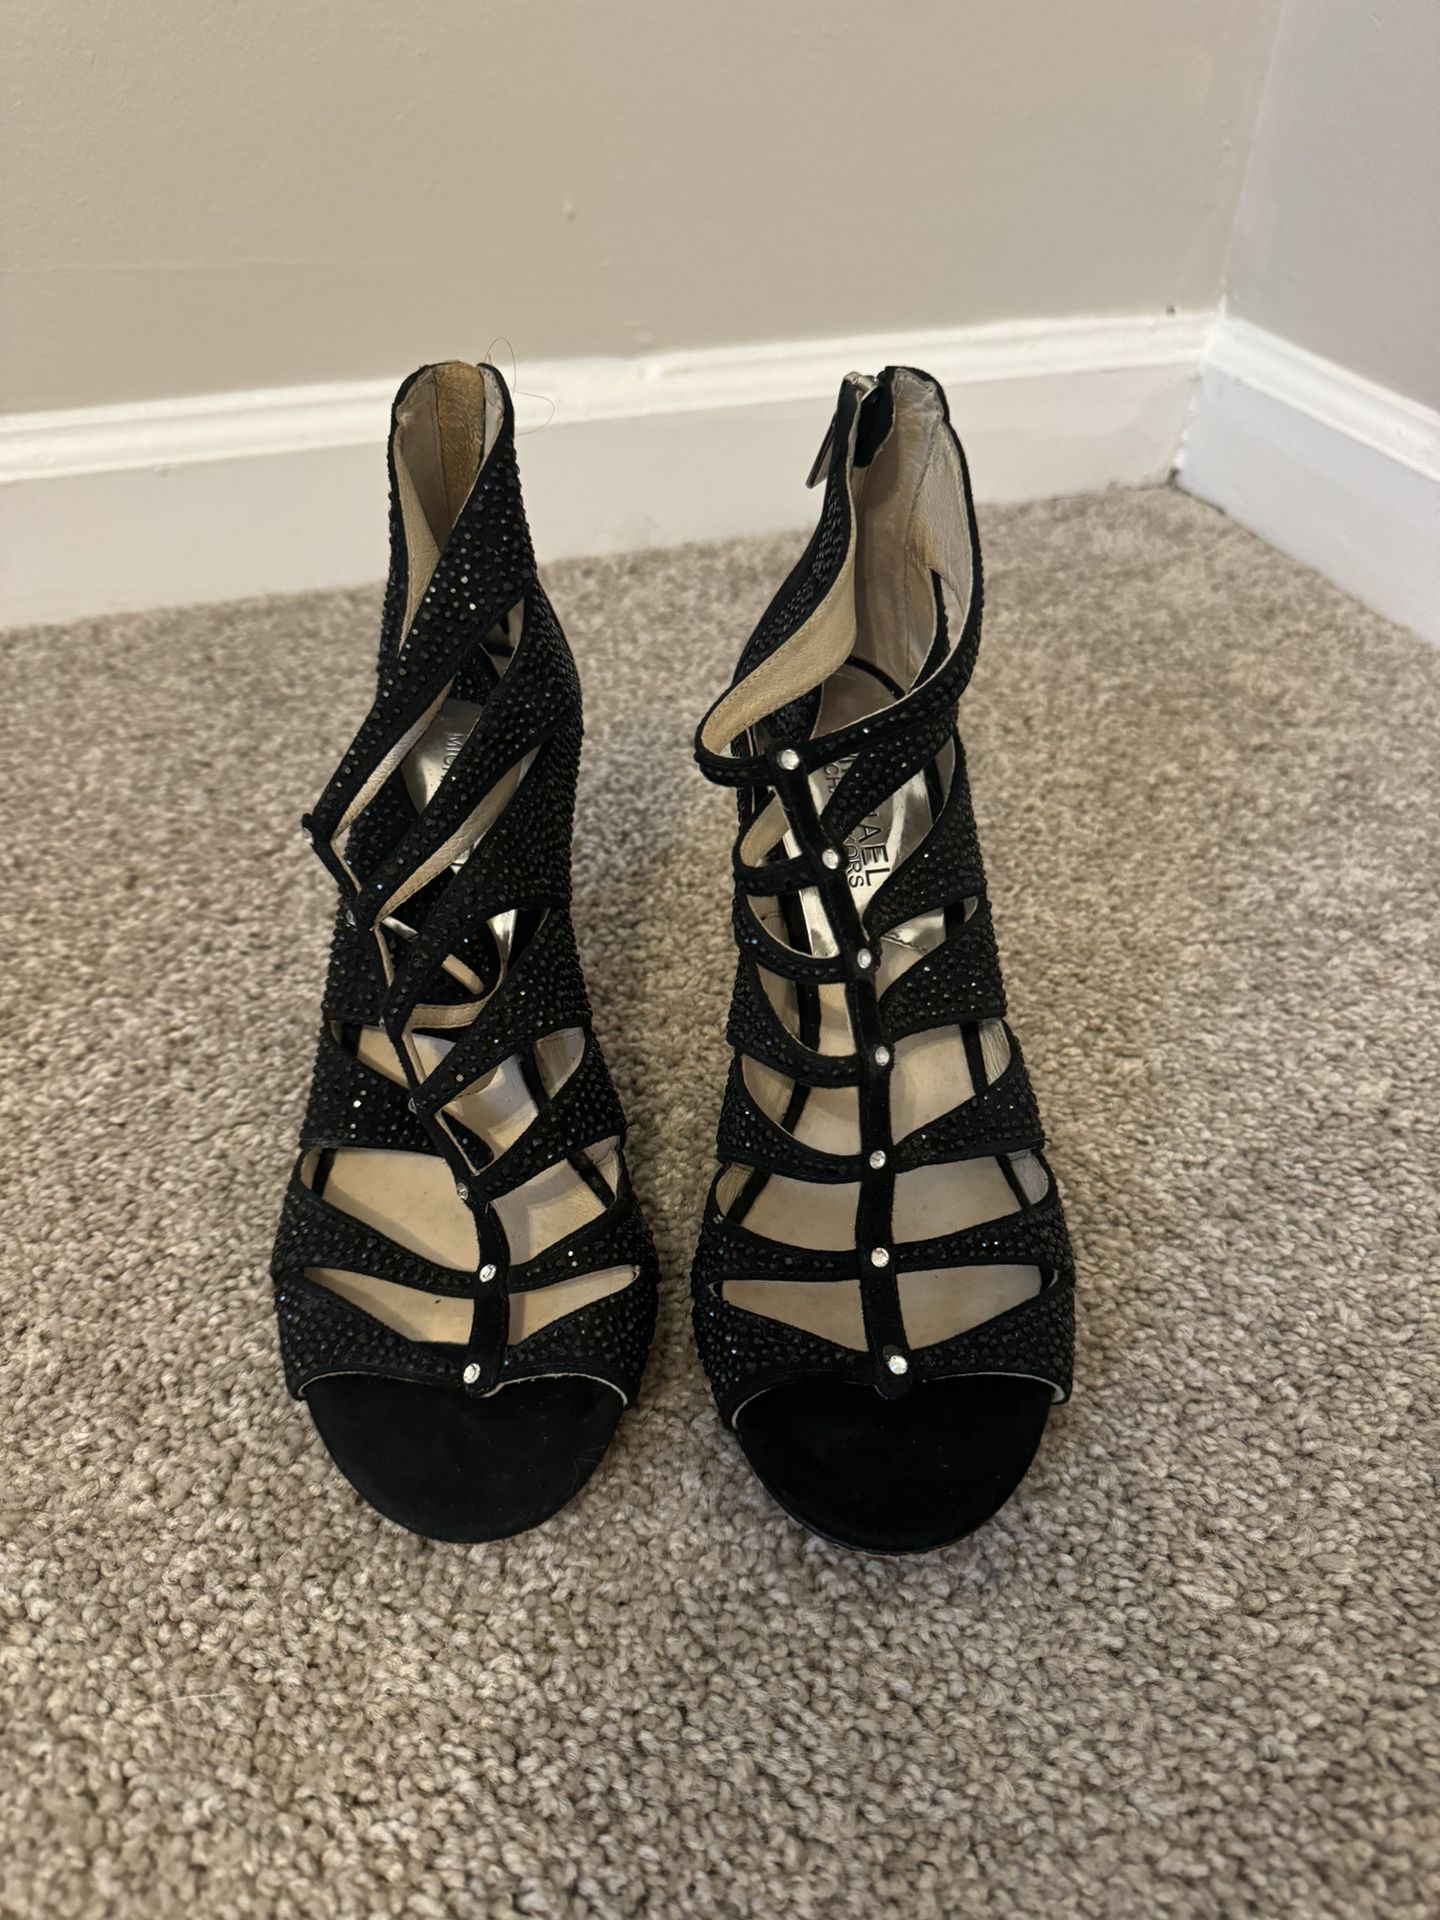 Michael Kors Women's Black Marvis Open-toe Embellished Suede Sandals Size 7